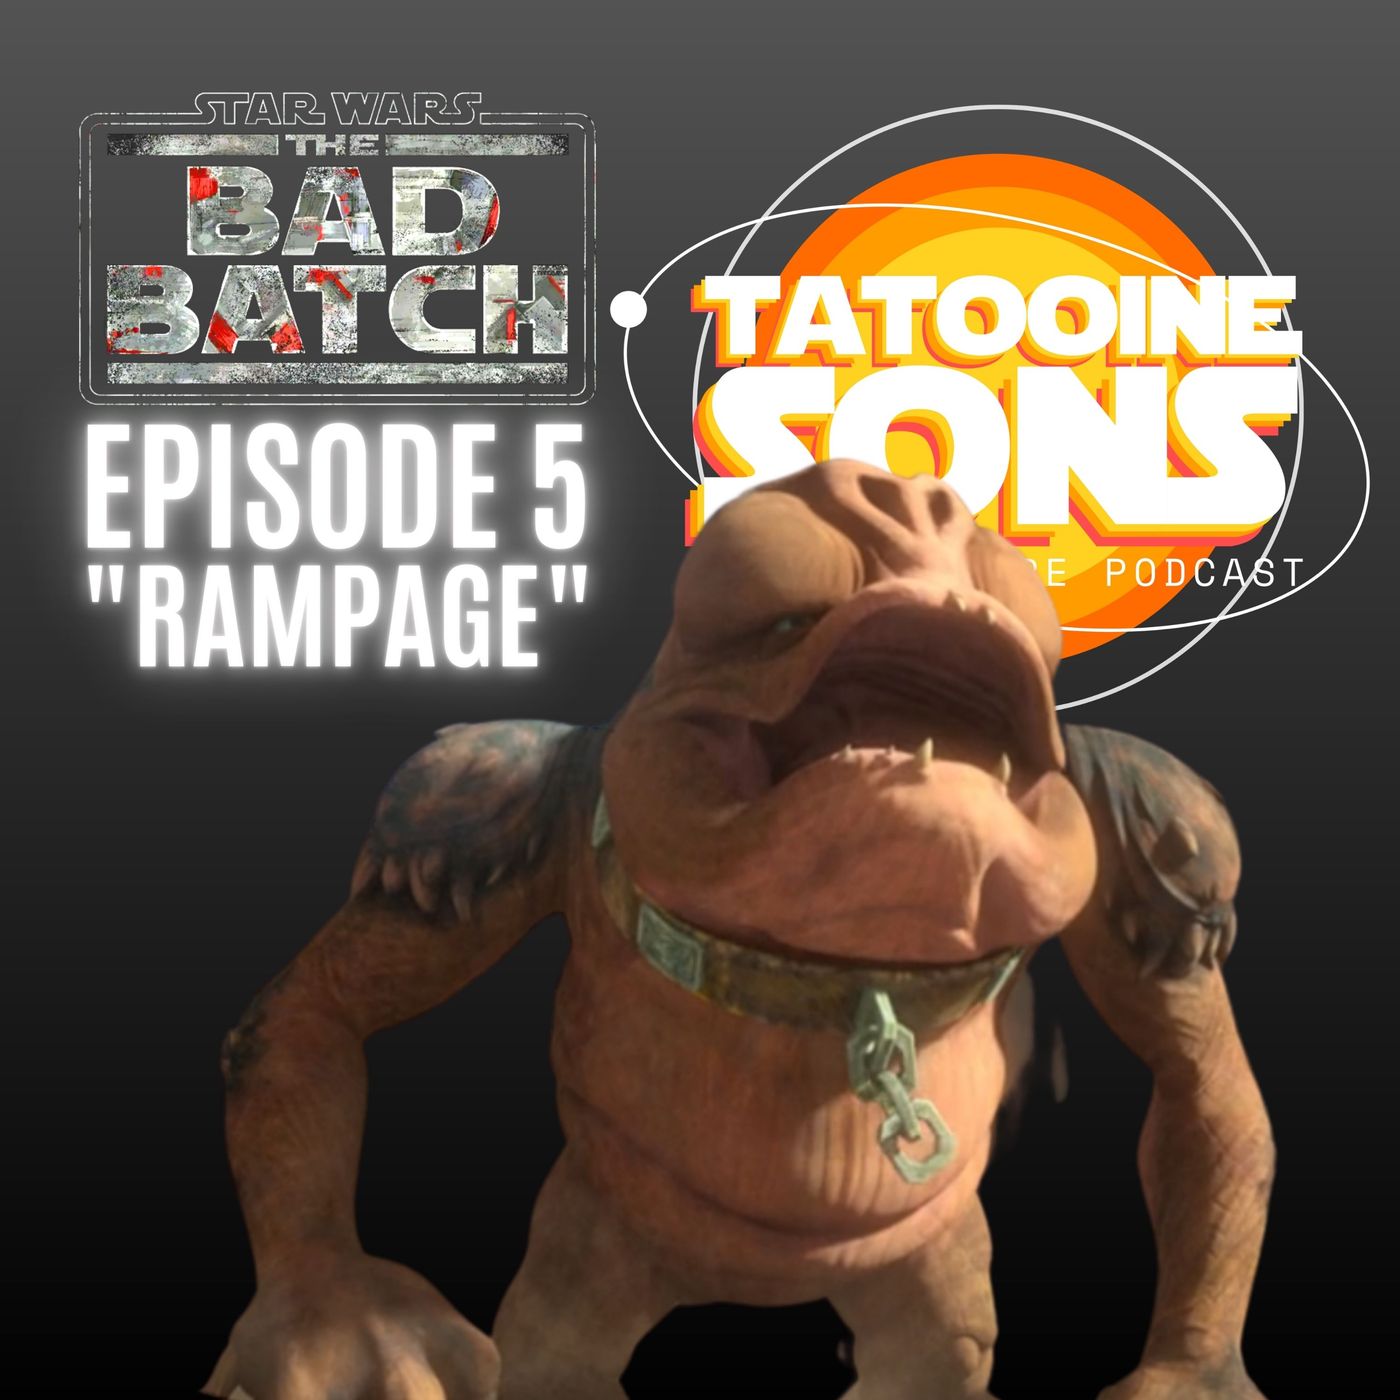 The Bad Batch Season 1Episode 5 ”Rampage” Reaction